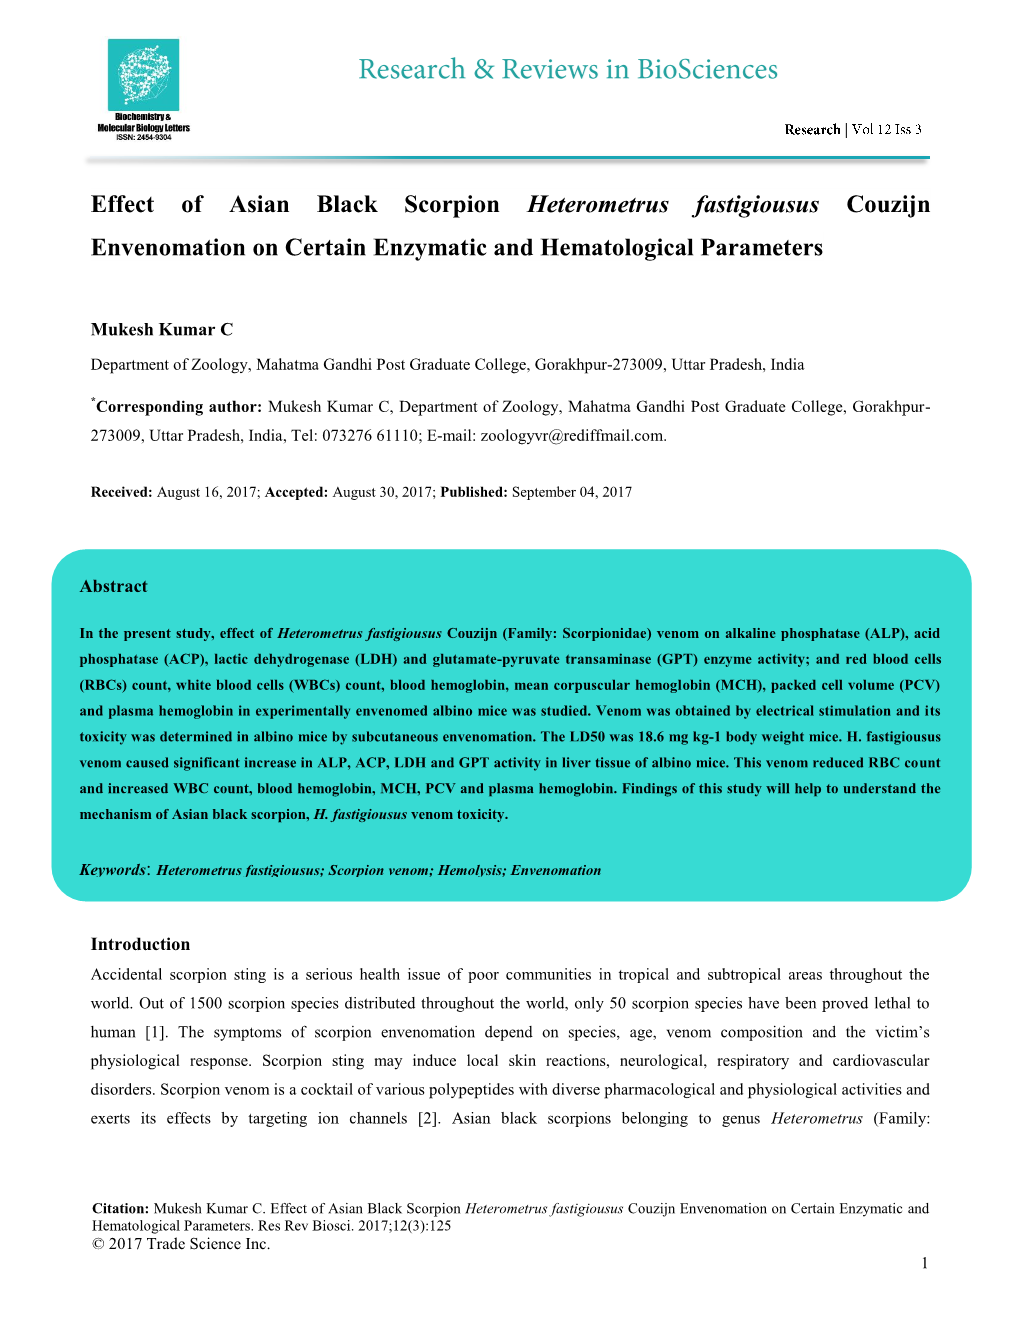 Effect of Asian Black Scorpion Heterometrus Fastigiousus Couzijn Envenomation on Certain Enzymatic and Hematological Parameters